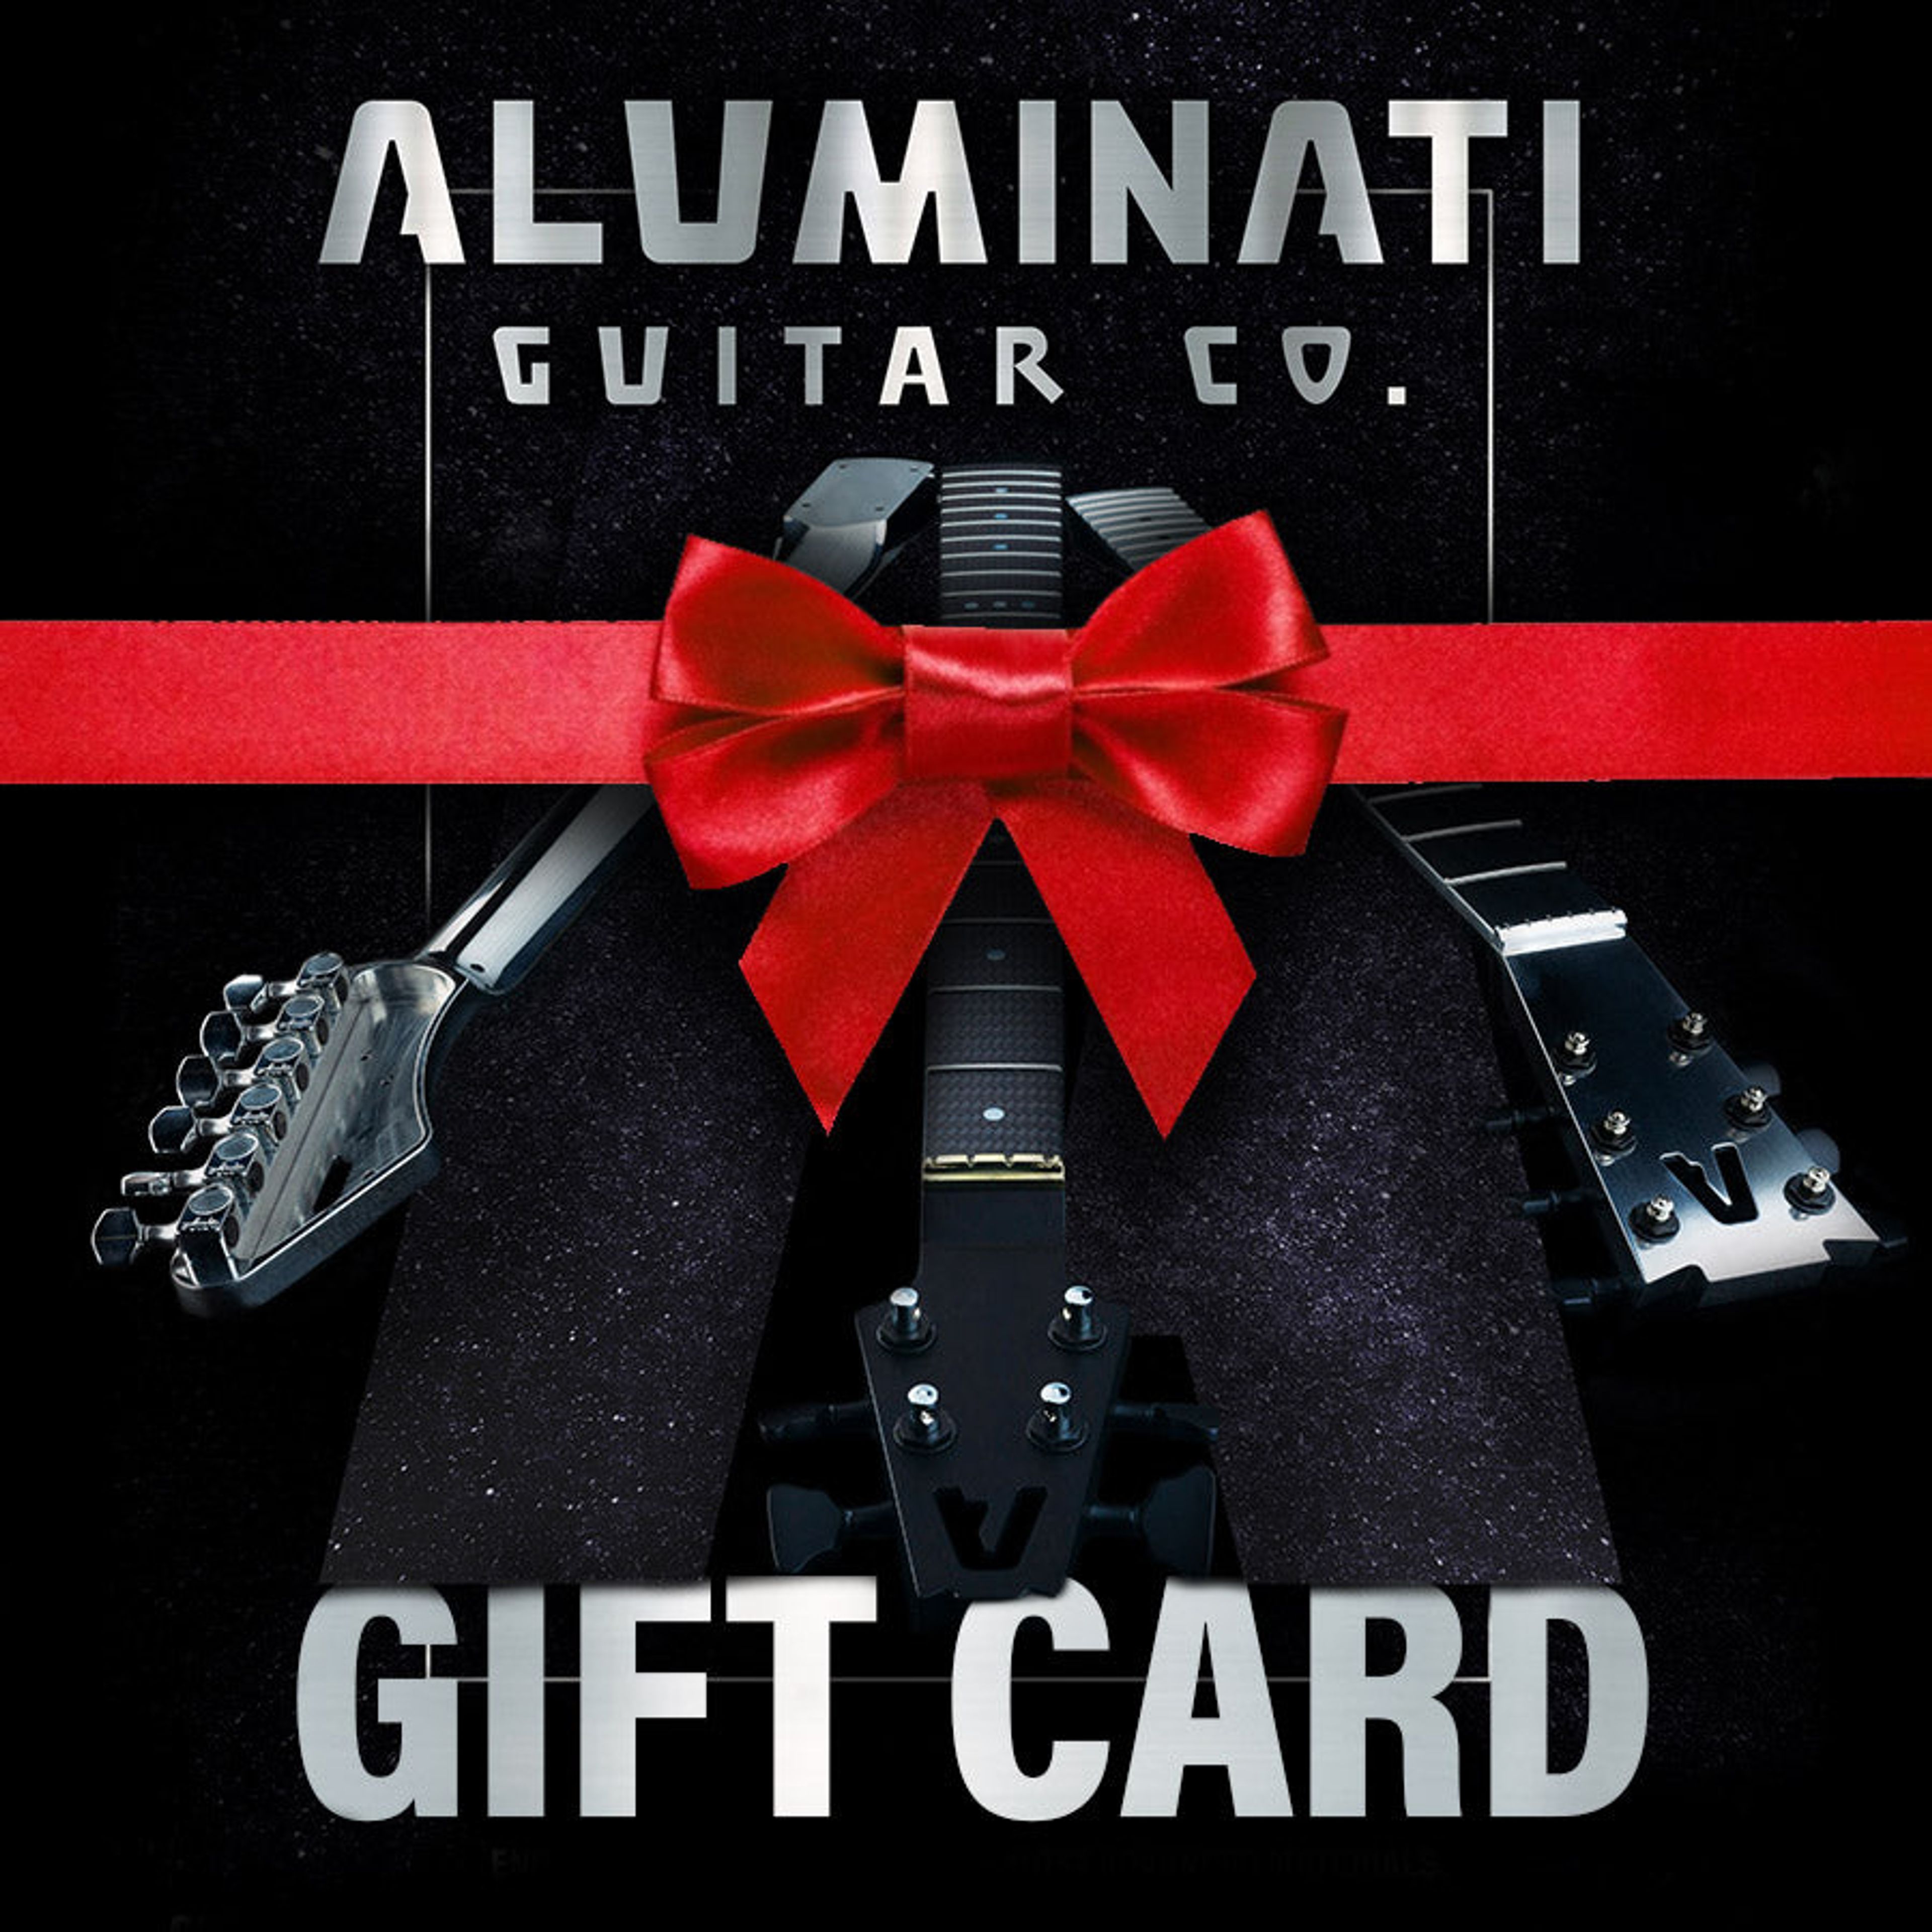 Aluminati Guitar Co. Gift Card